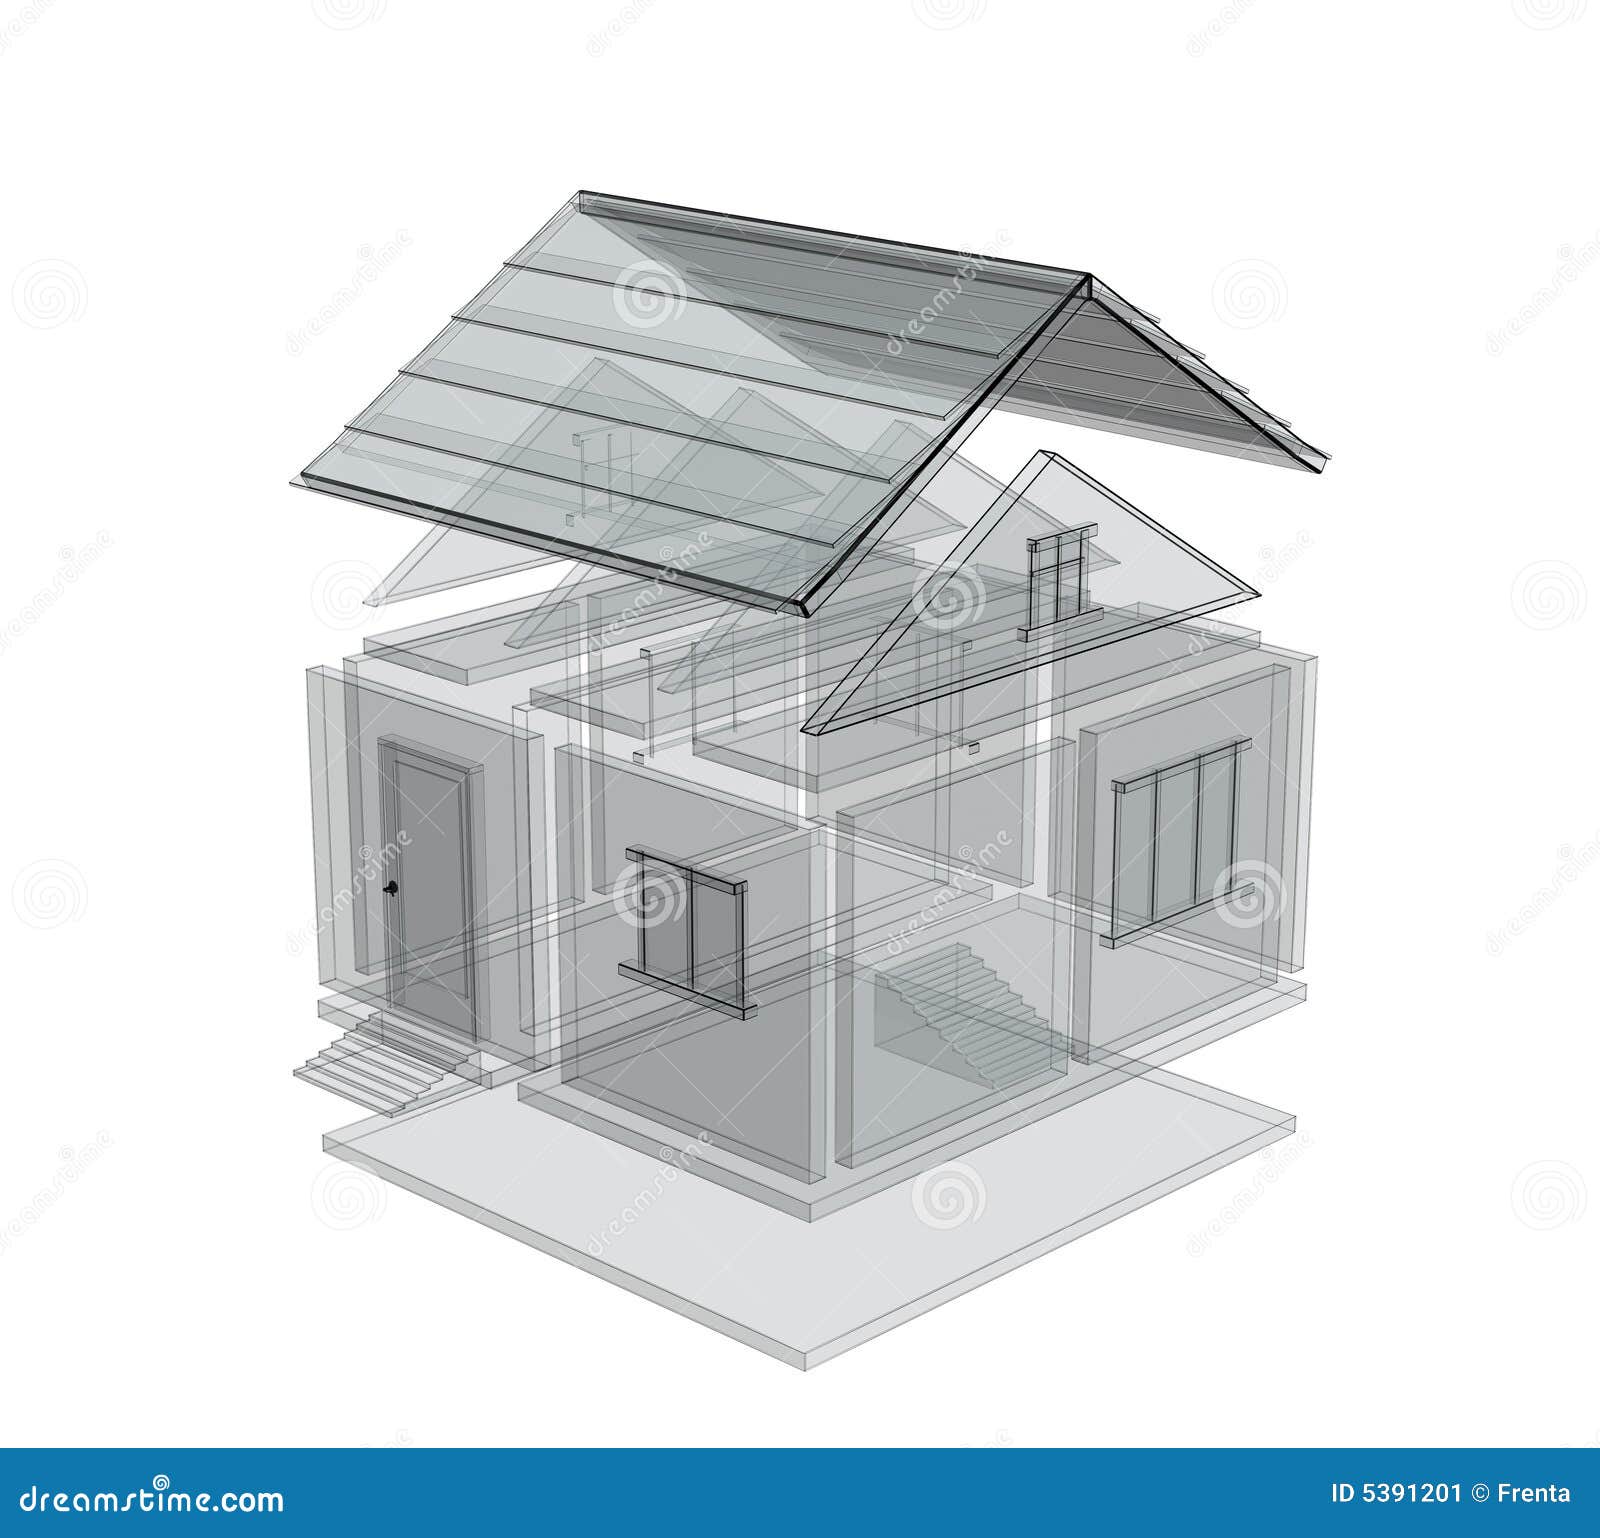  3d  sketch of a house  stock illustration Illustration of 